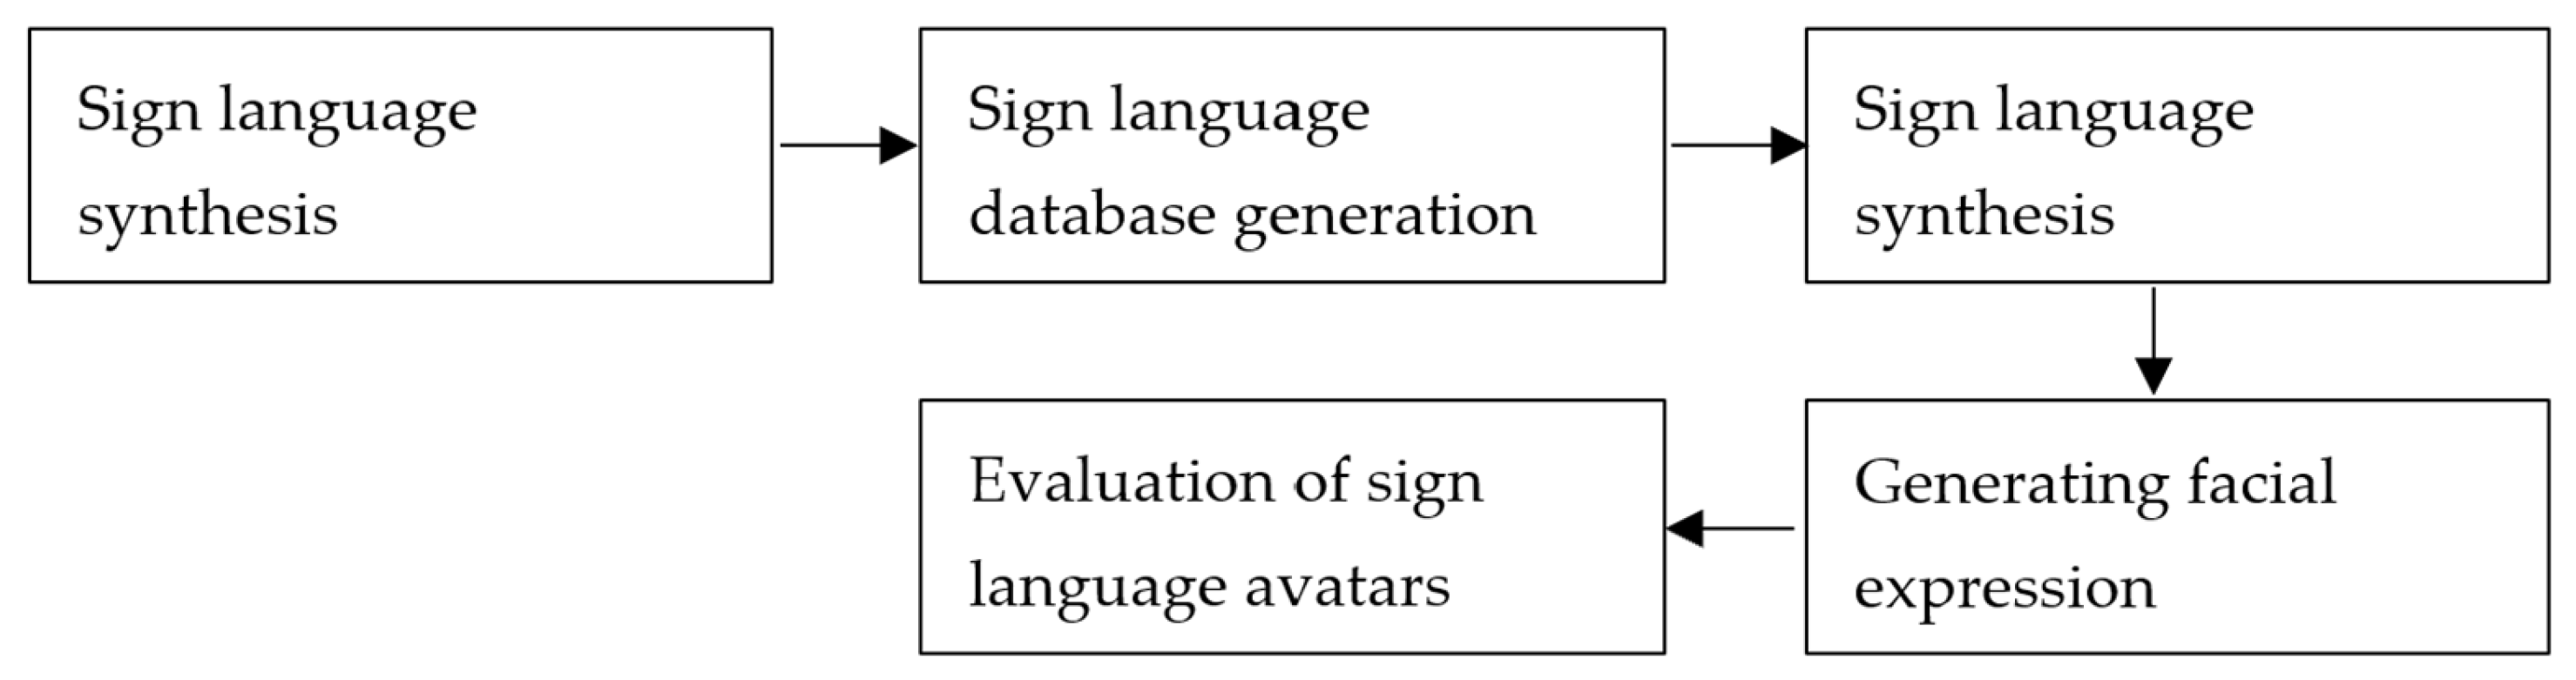 Grow to 5: Module F: Speech and Language Development - TATS